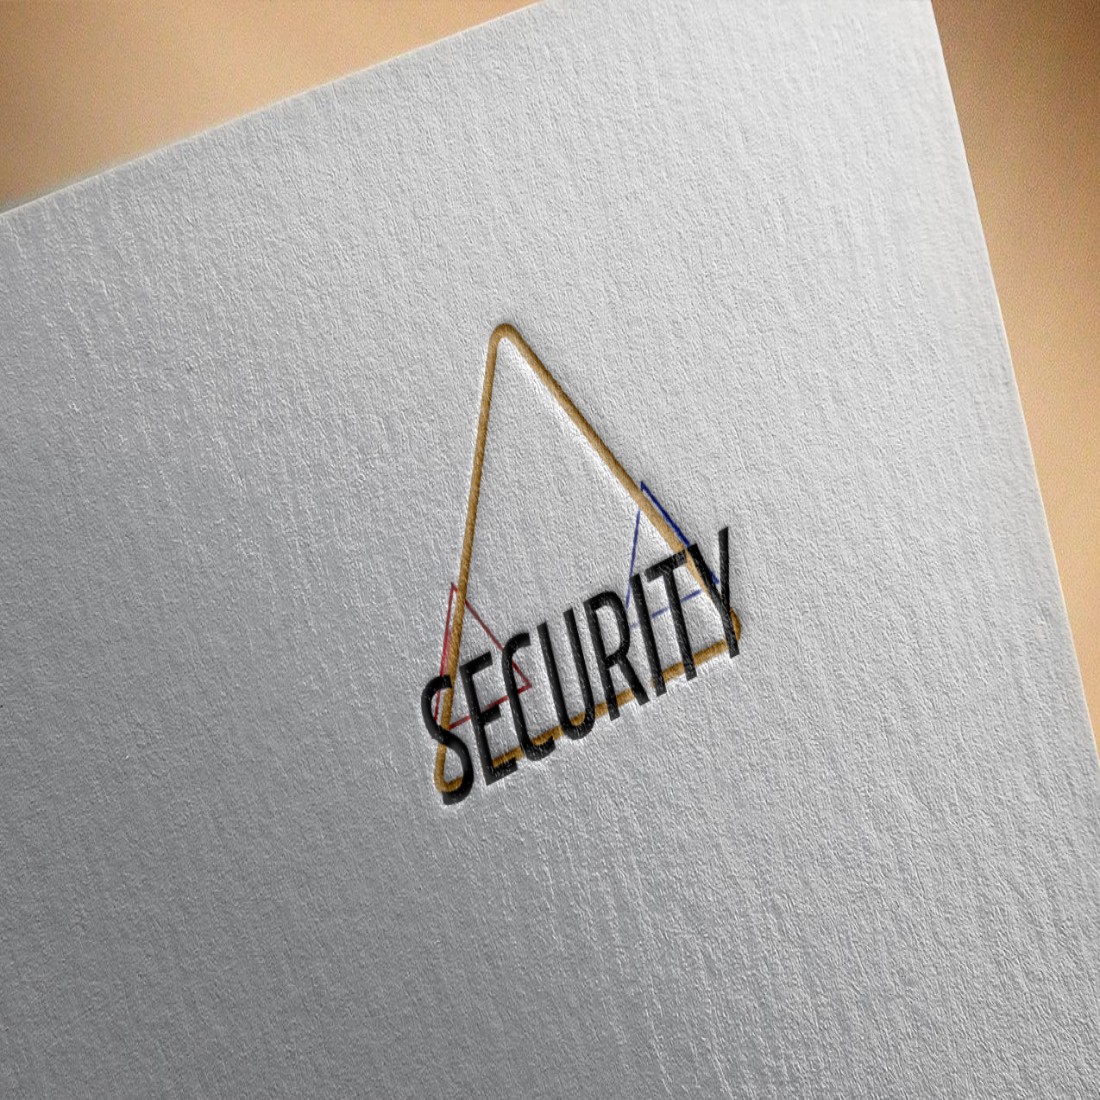 Minimalism Logo Security Design cover image.